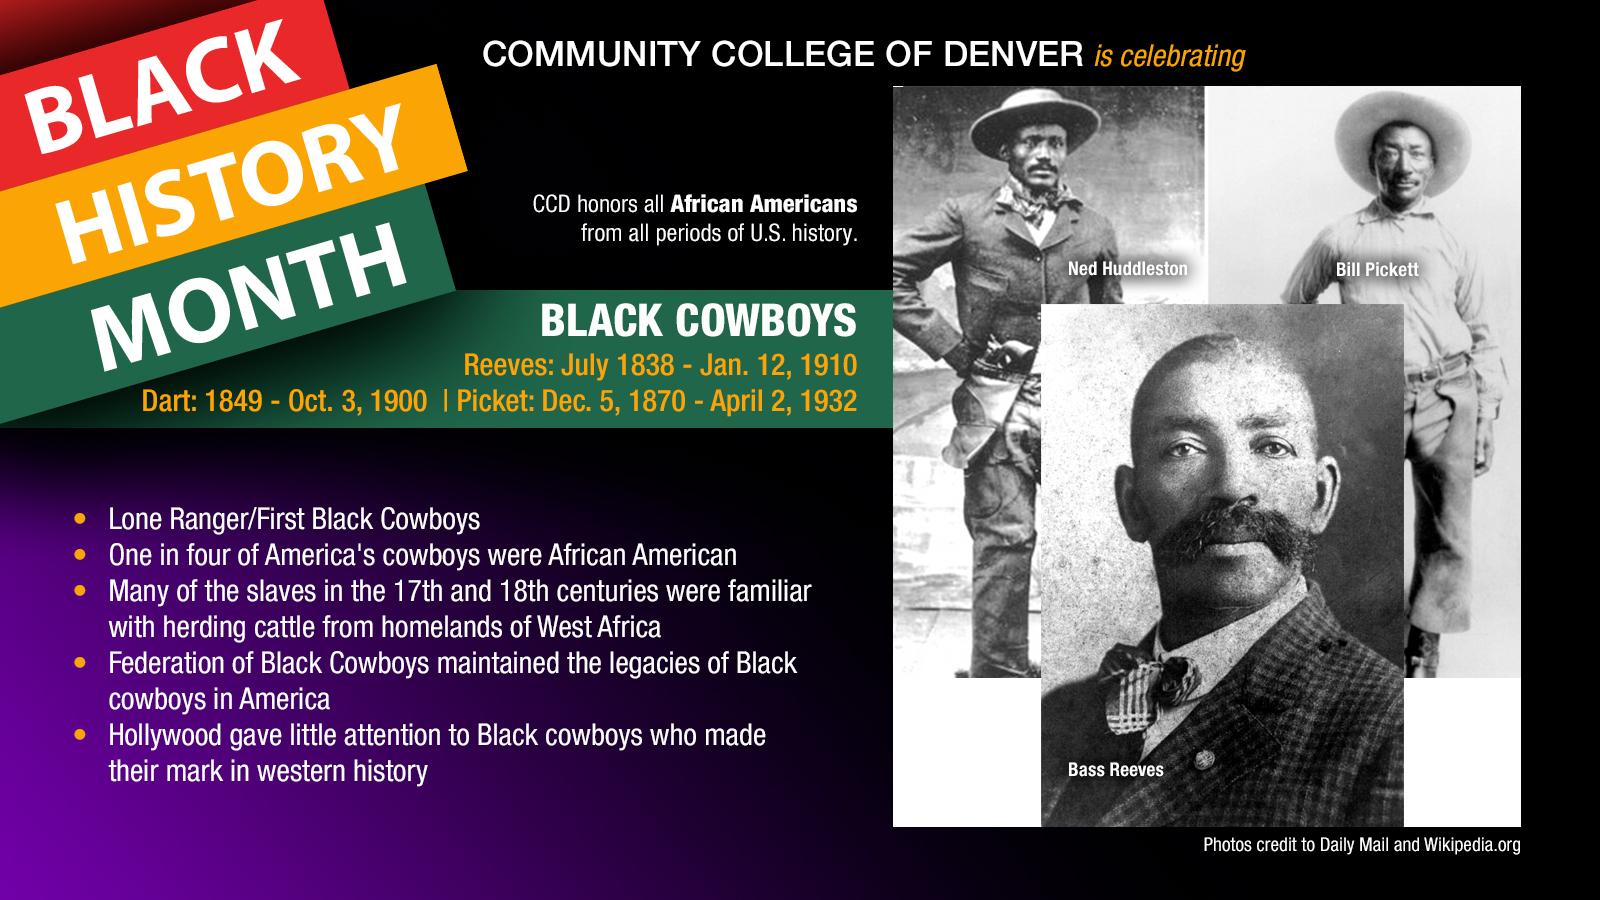 Black History Month. Black Cowboys. Bass Reeves, Ned Huddleston, William Pickett facts.